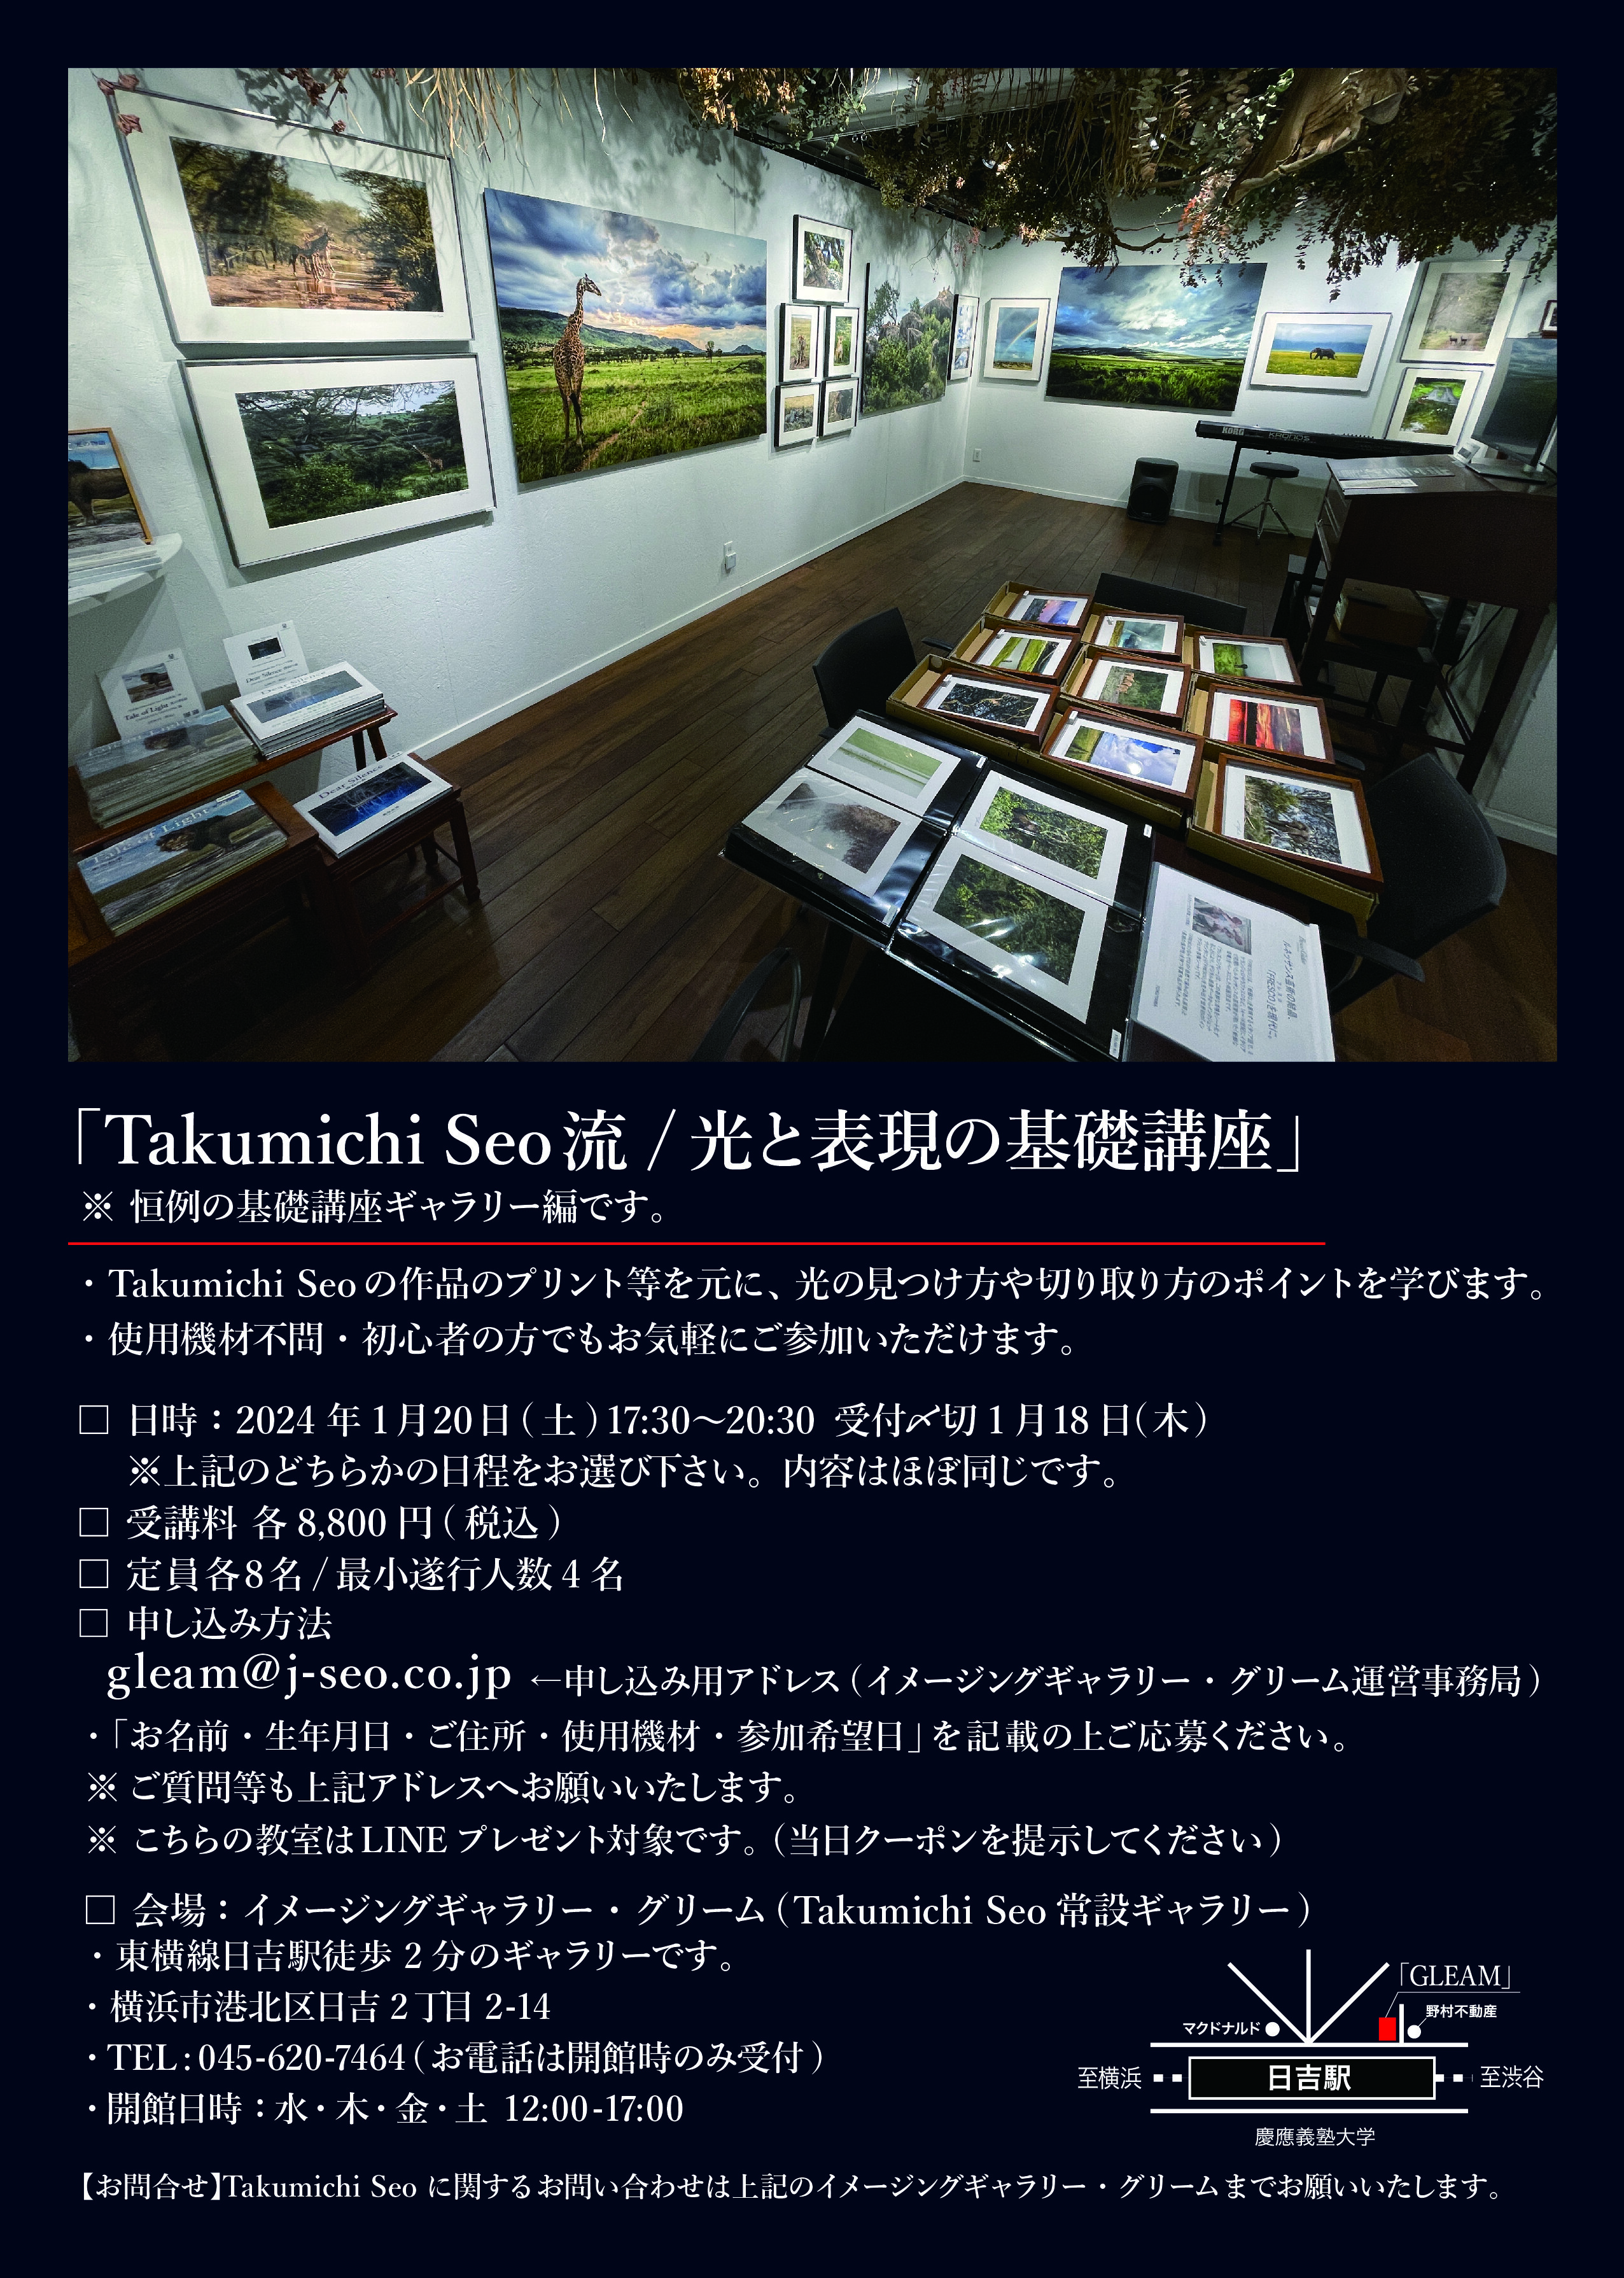 「Takumichi Seo 流/光と表現の基礎講座」ギャラリー編」1月のご案内